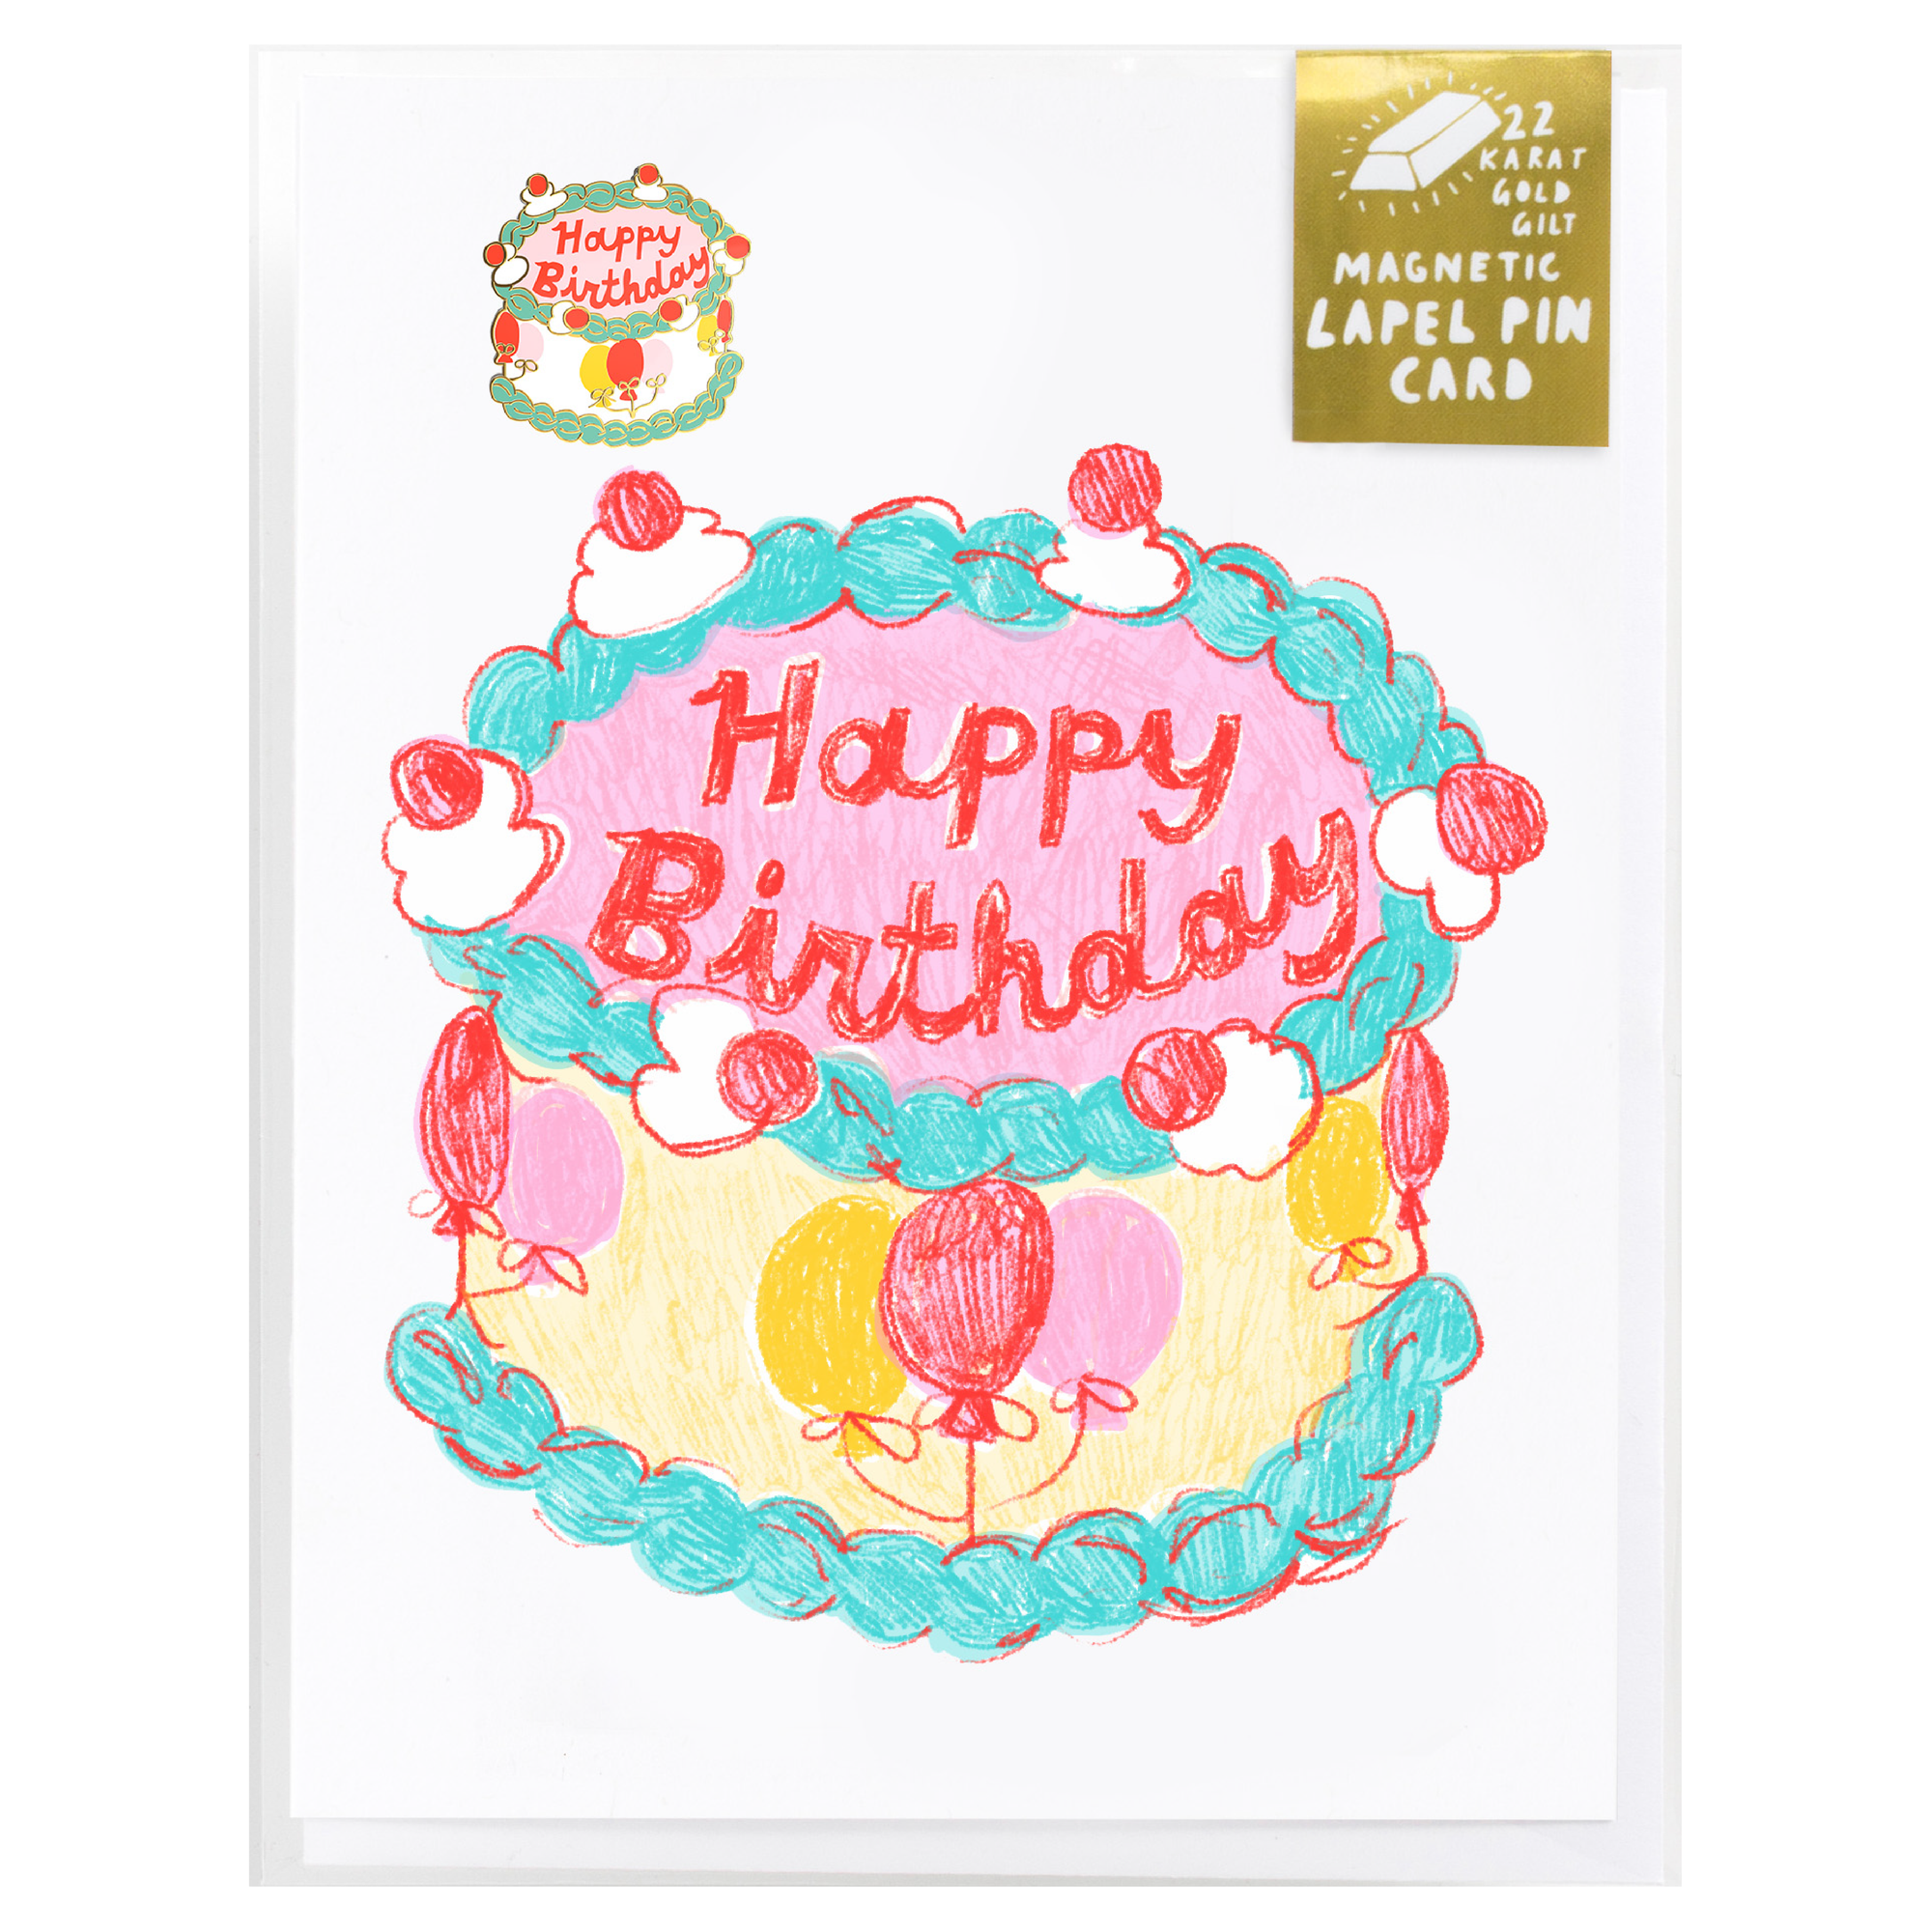 Happy Birthday Balloon Cake - Lapel Pin Card